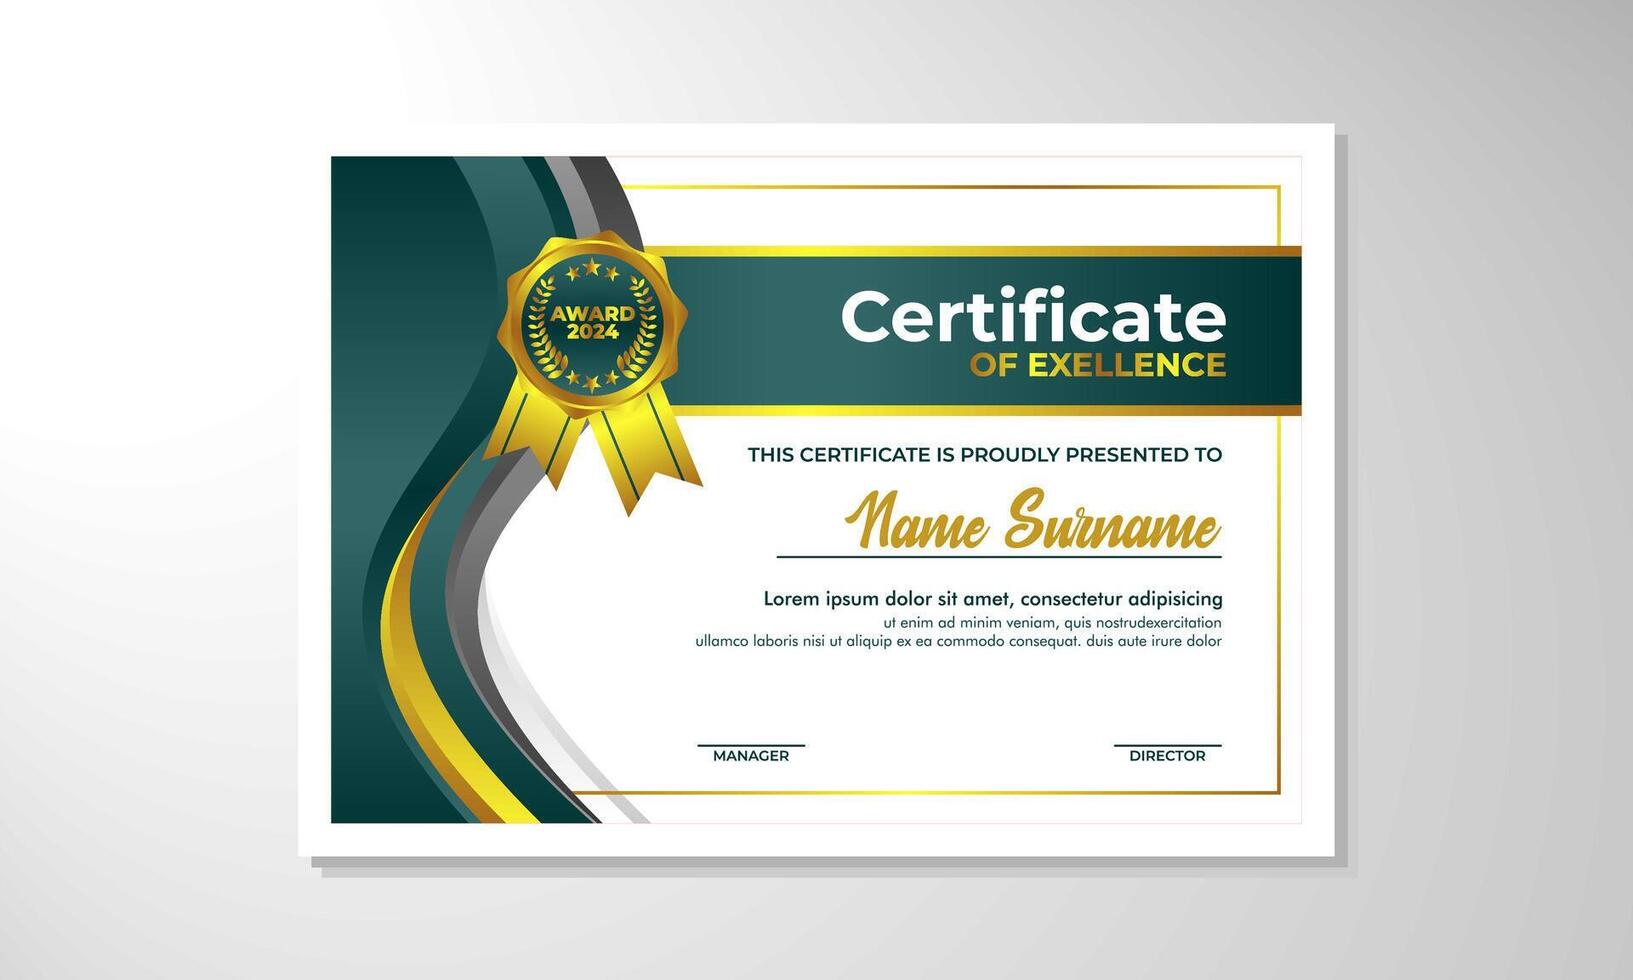 elegant gradient certificate design template vector